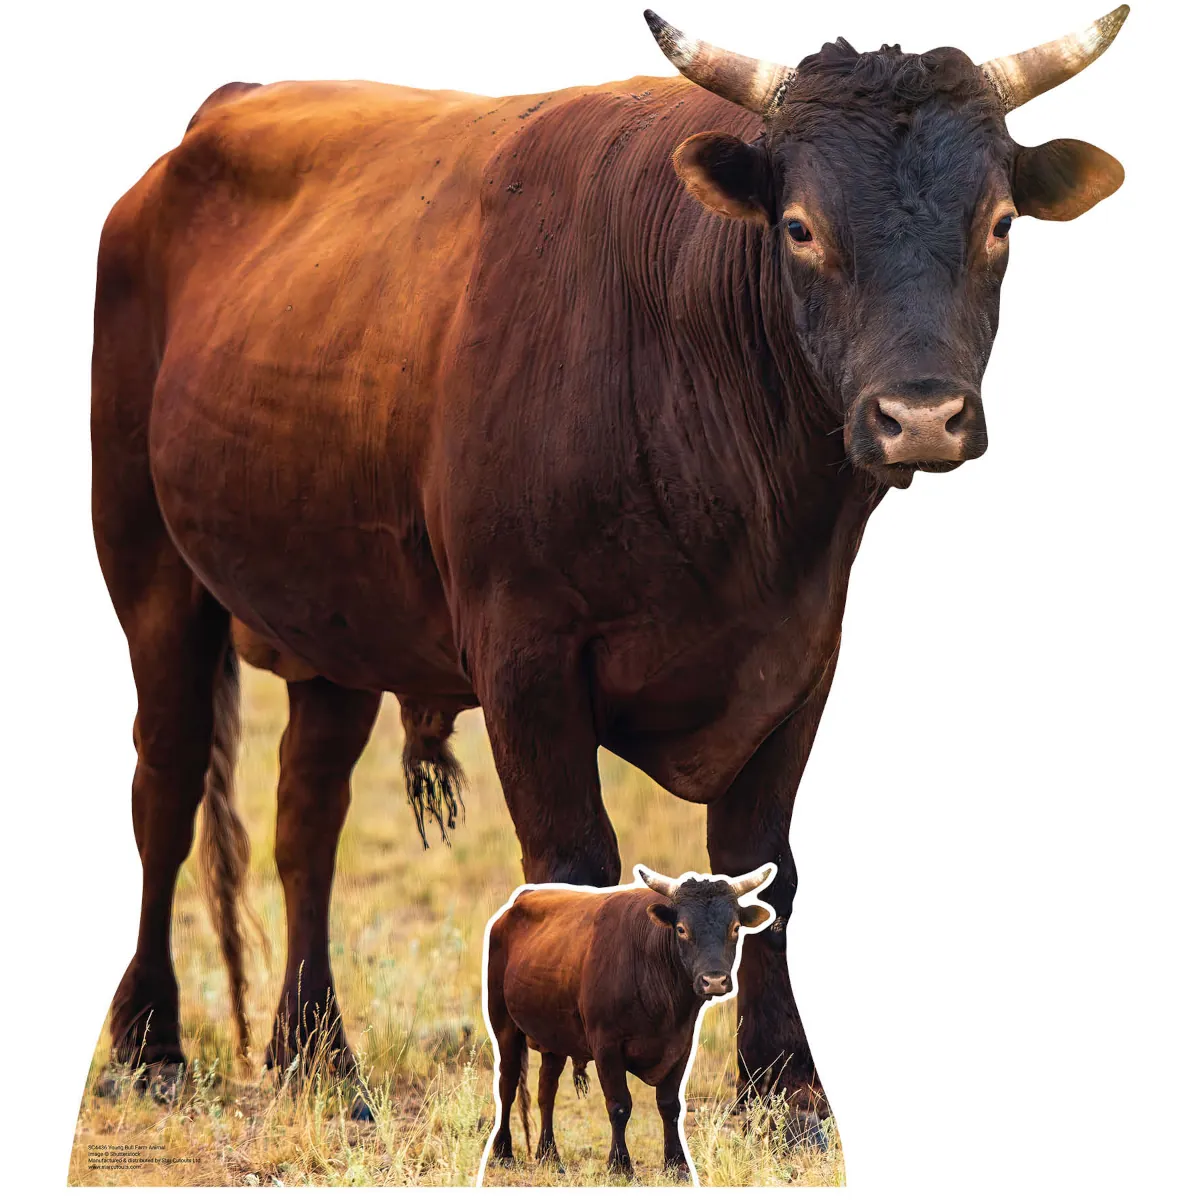 SC4436 Young Bull (Farm Animal) Large + Mini Cardboard Cutout Standee Front